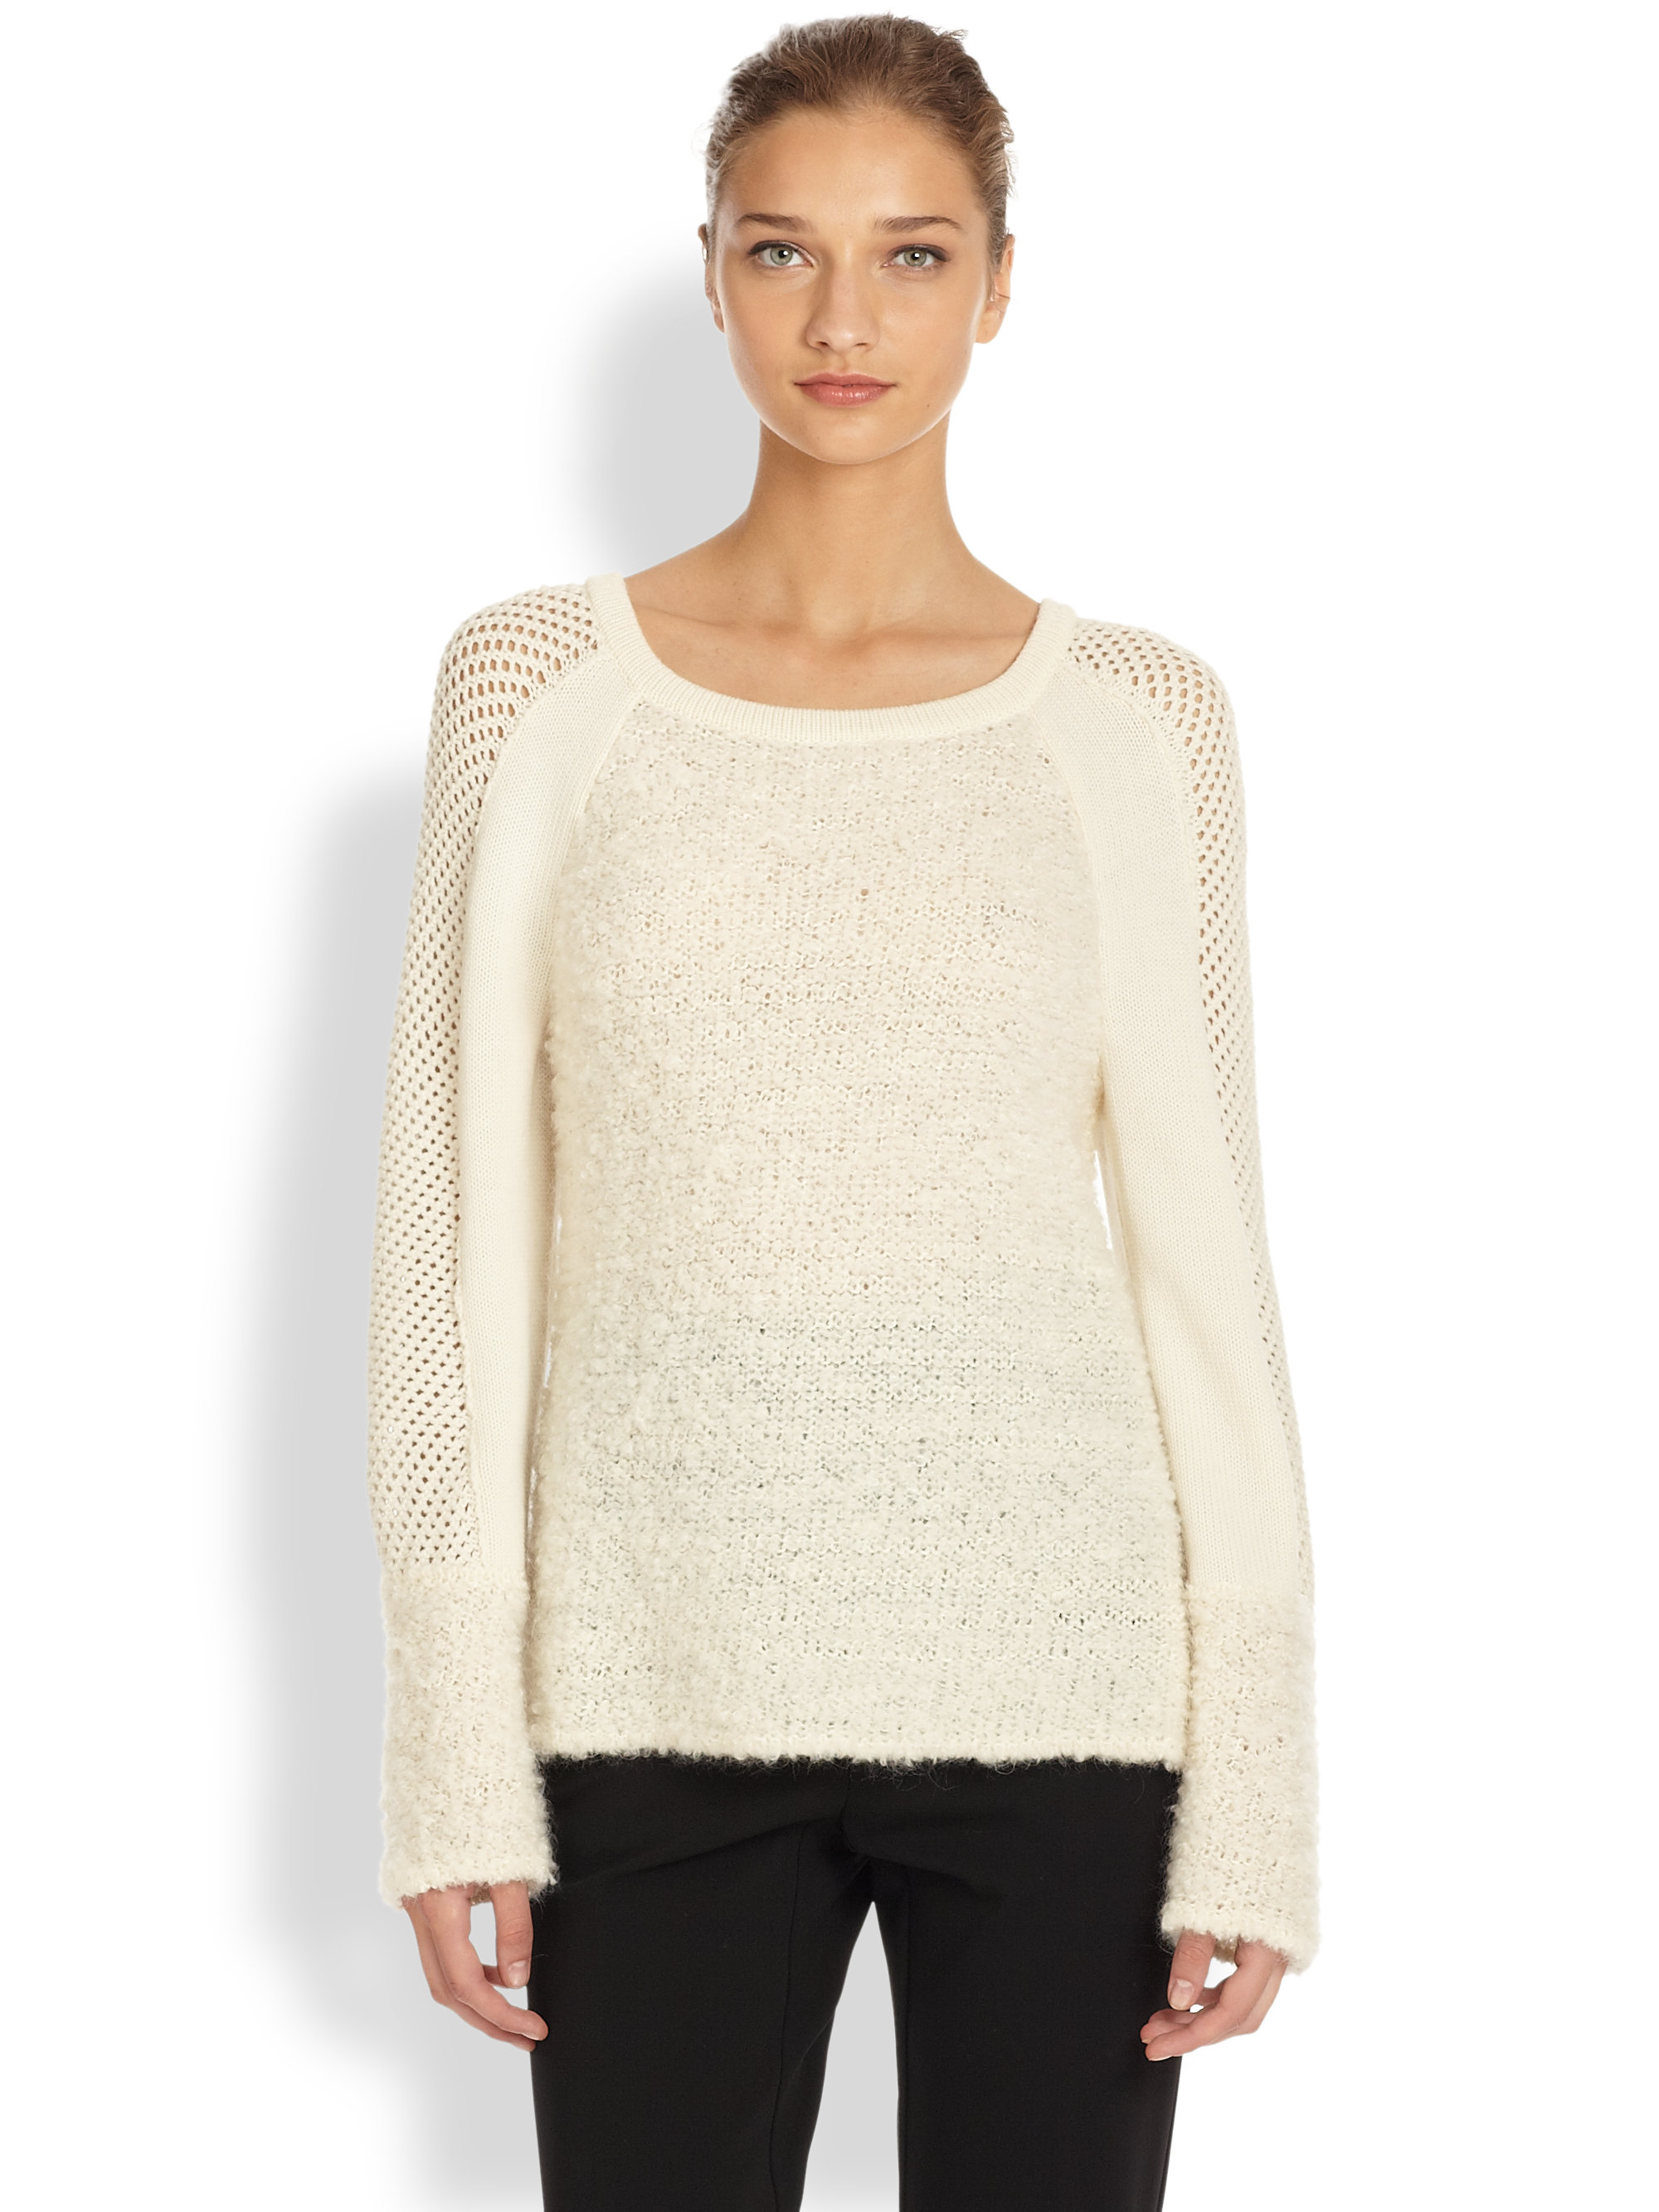 Lyst - Philosophy Fuzzy Sheer Detail Sweater in White